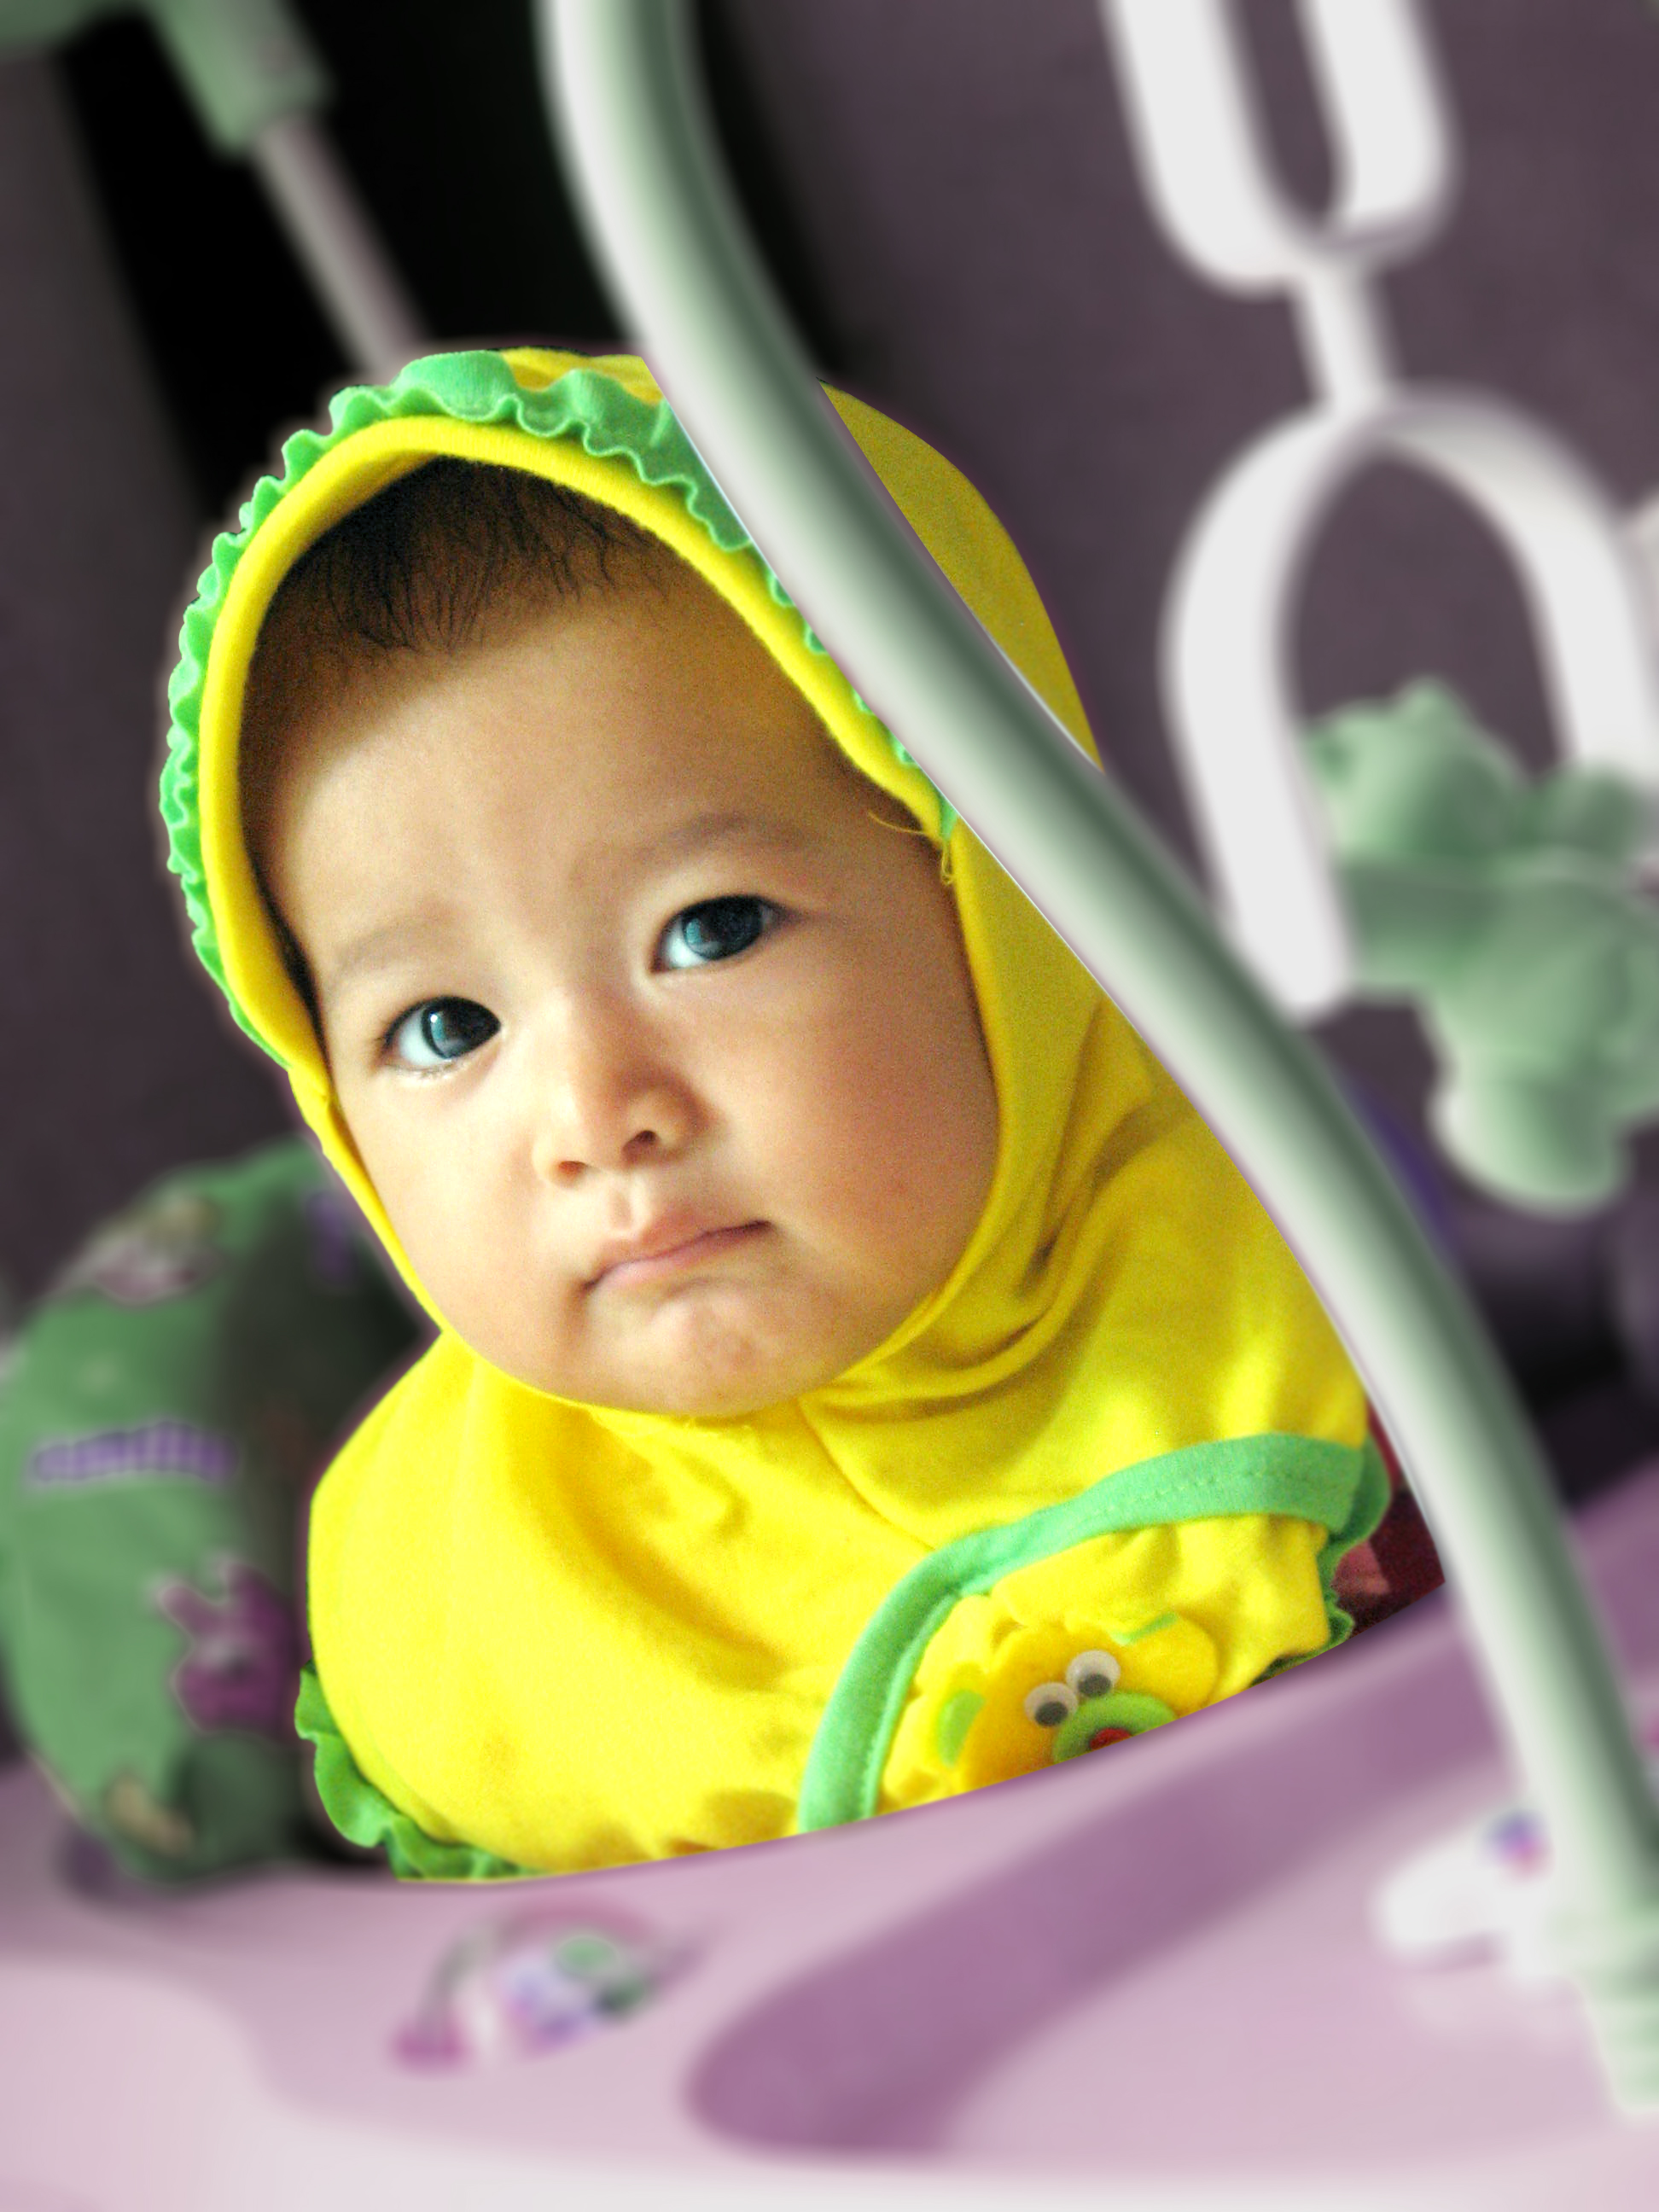 Foto Anak Bayi Lucu Imut Terlengkap Display Picture Update